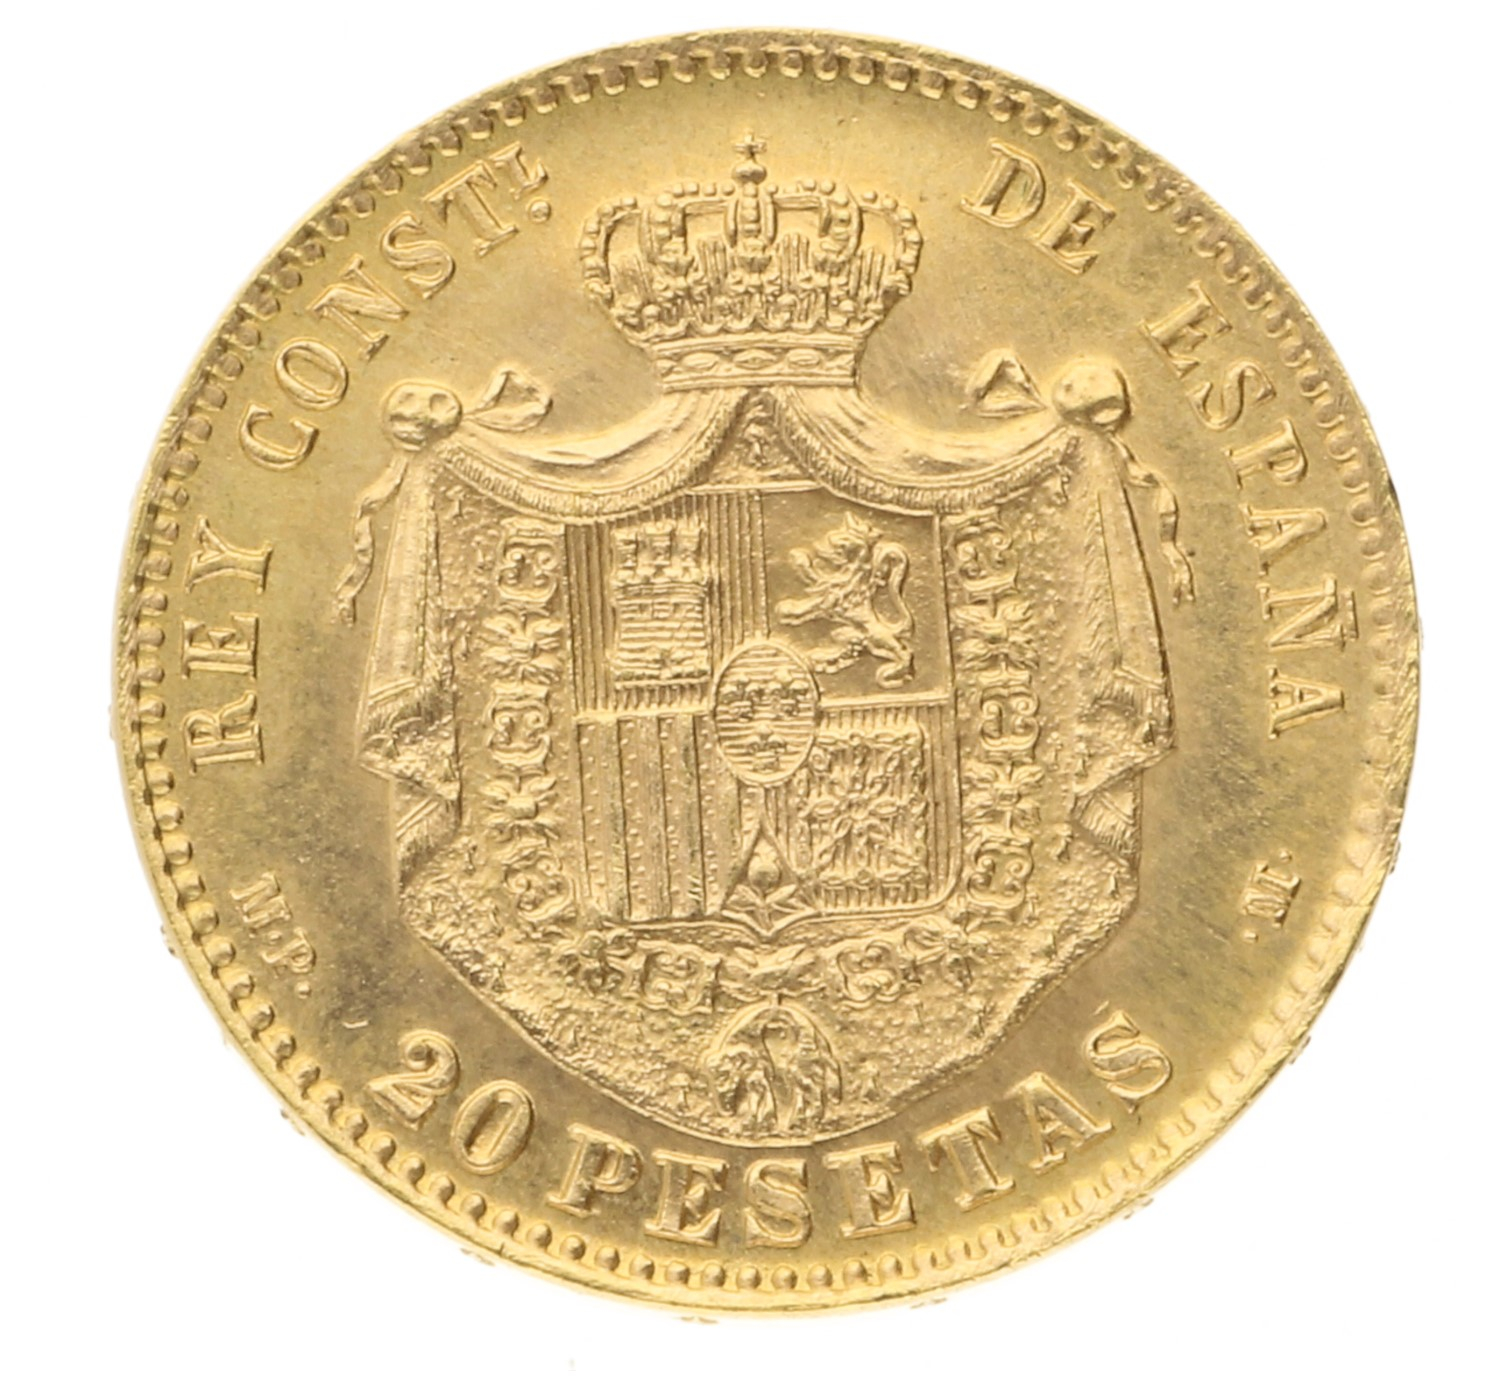 20 Pesetas - Spain - 1896(1962)